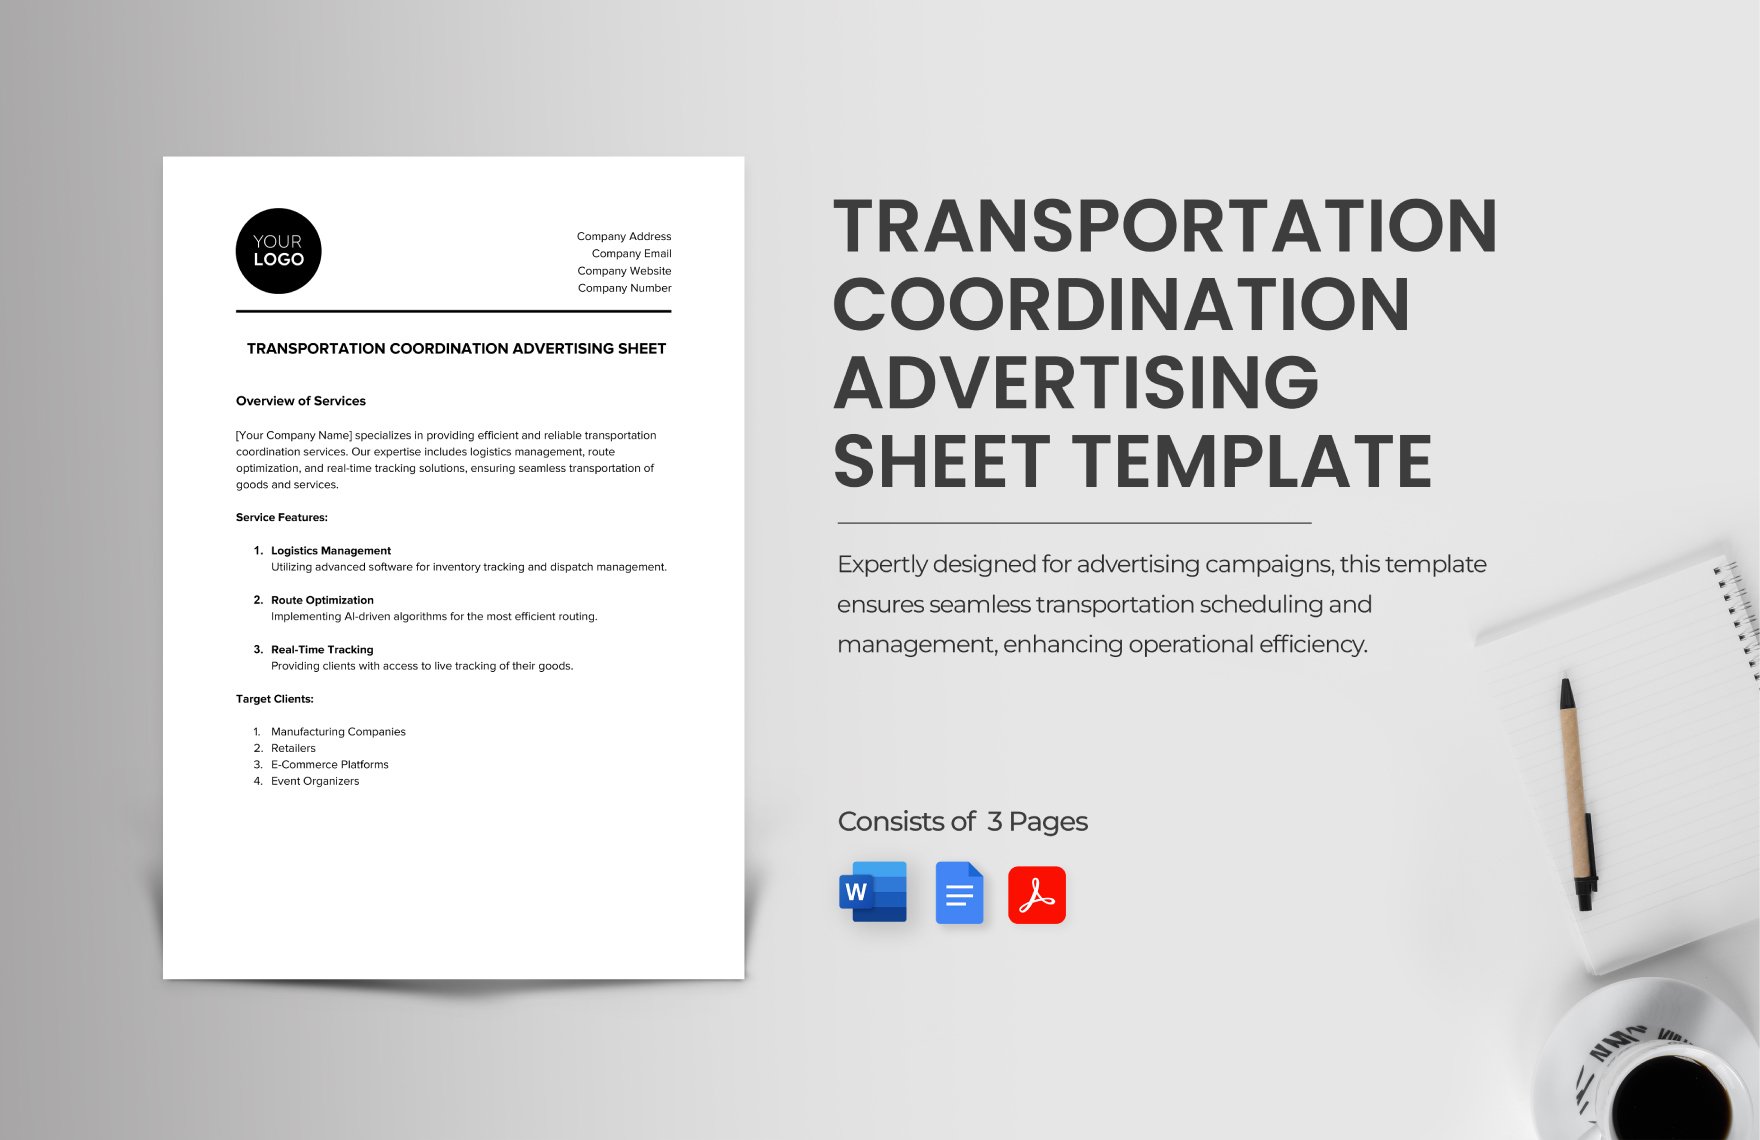 Transportation Coordination Advertising Sheet Template